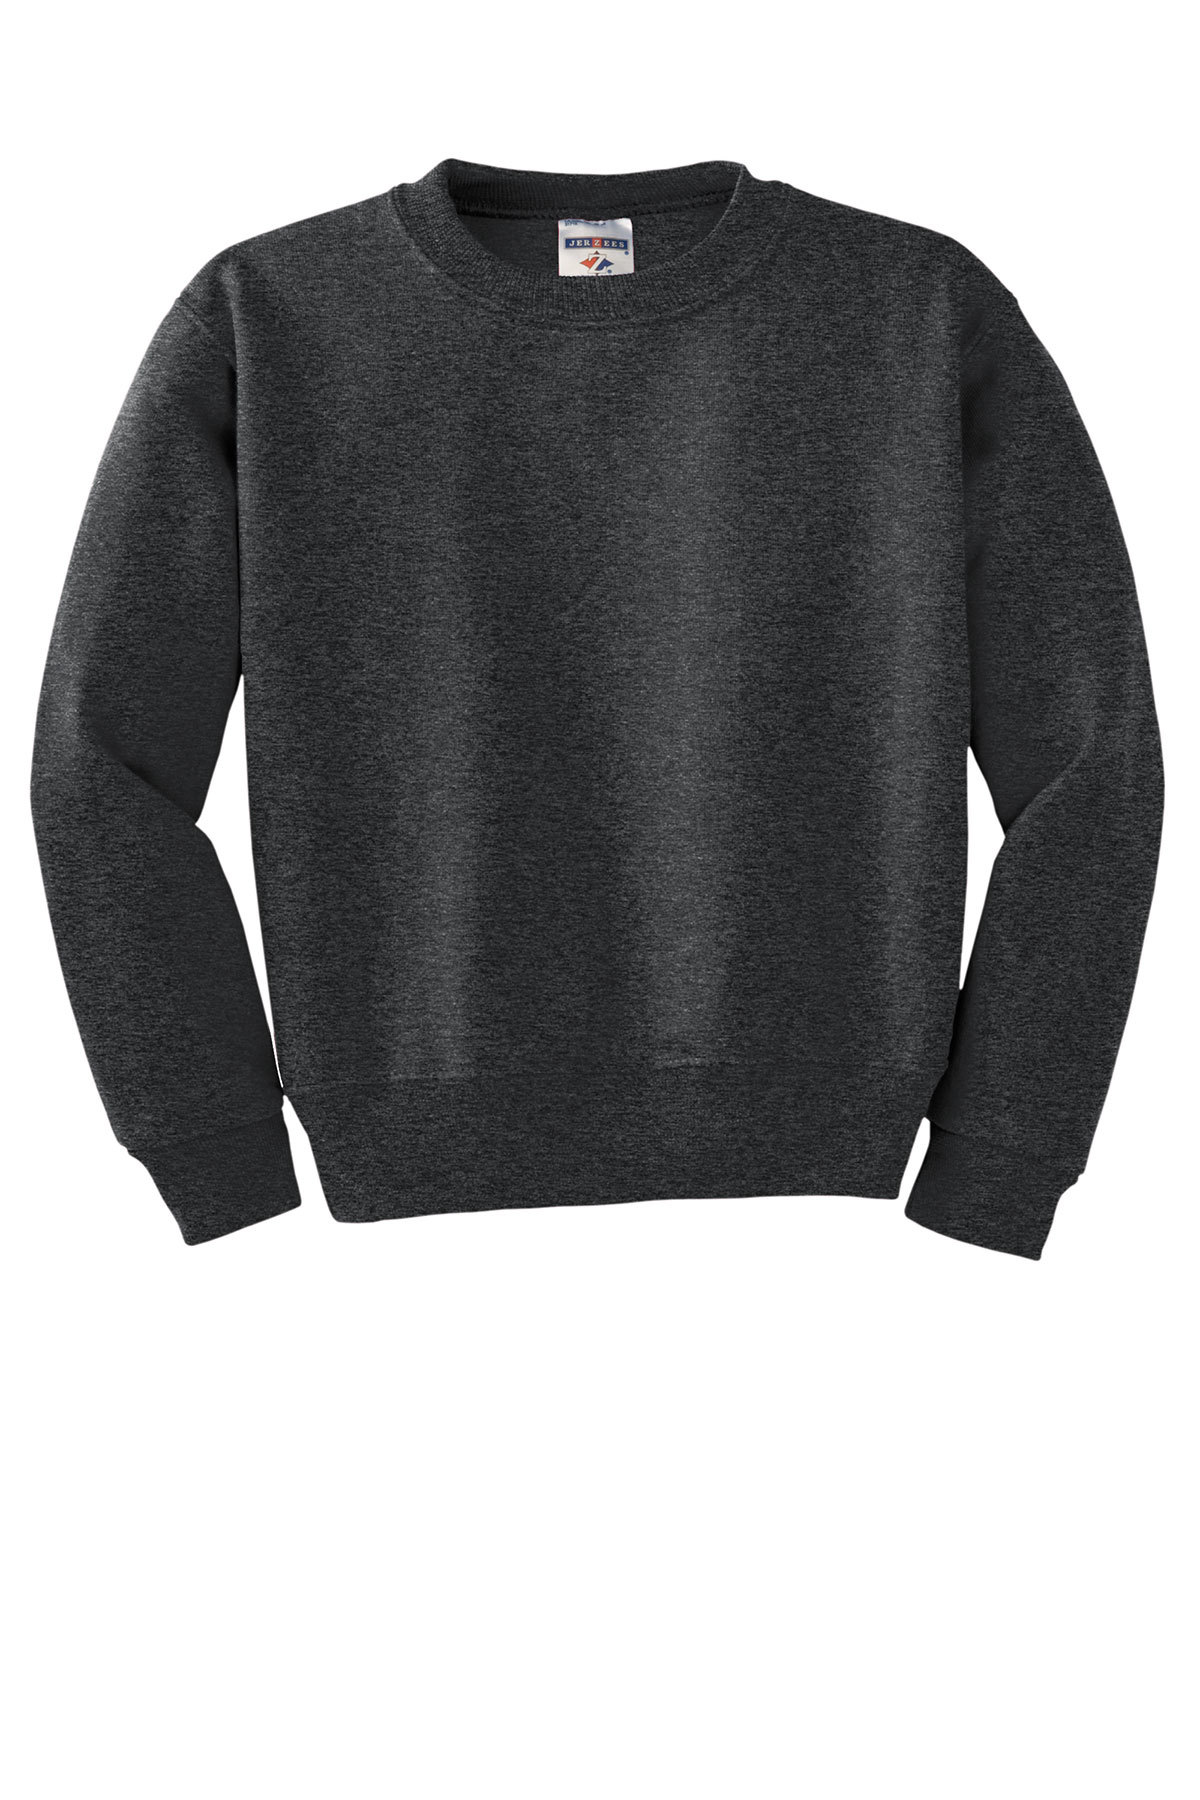 Jerzees - Youth NuBlend Crewneck Sweatshirt | Product | SanMar